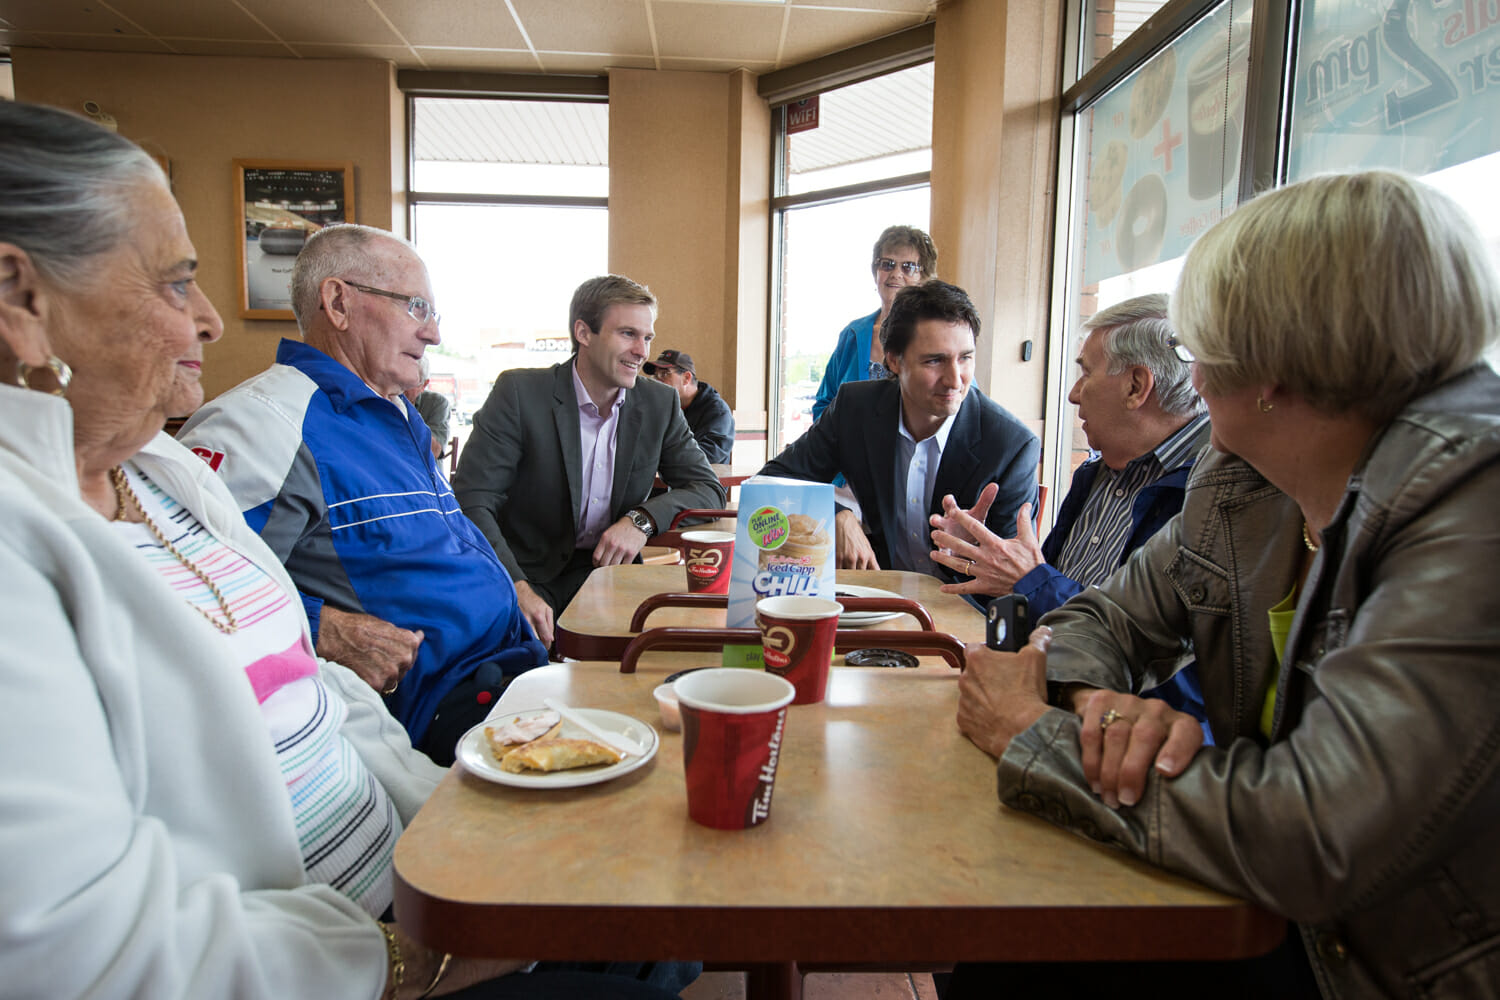 Justin, Brian Gallant and Liberal MP Dominic LeBlanc meet Quispamis residents at Tim Hortons. June 13, 2014.